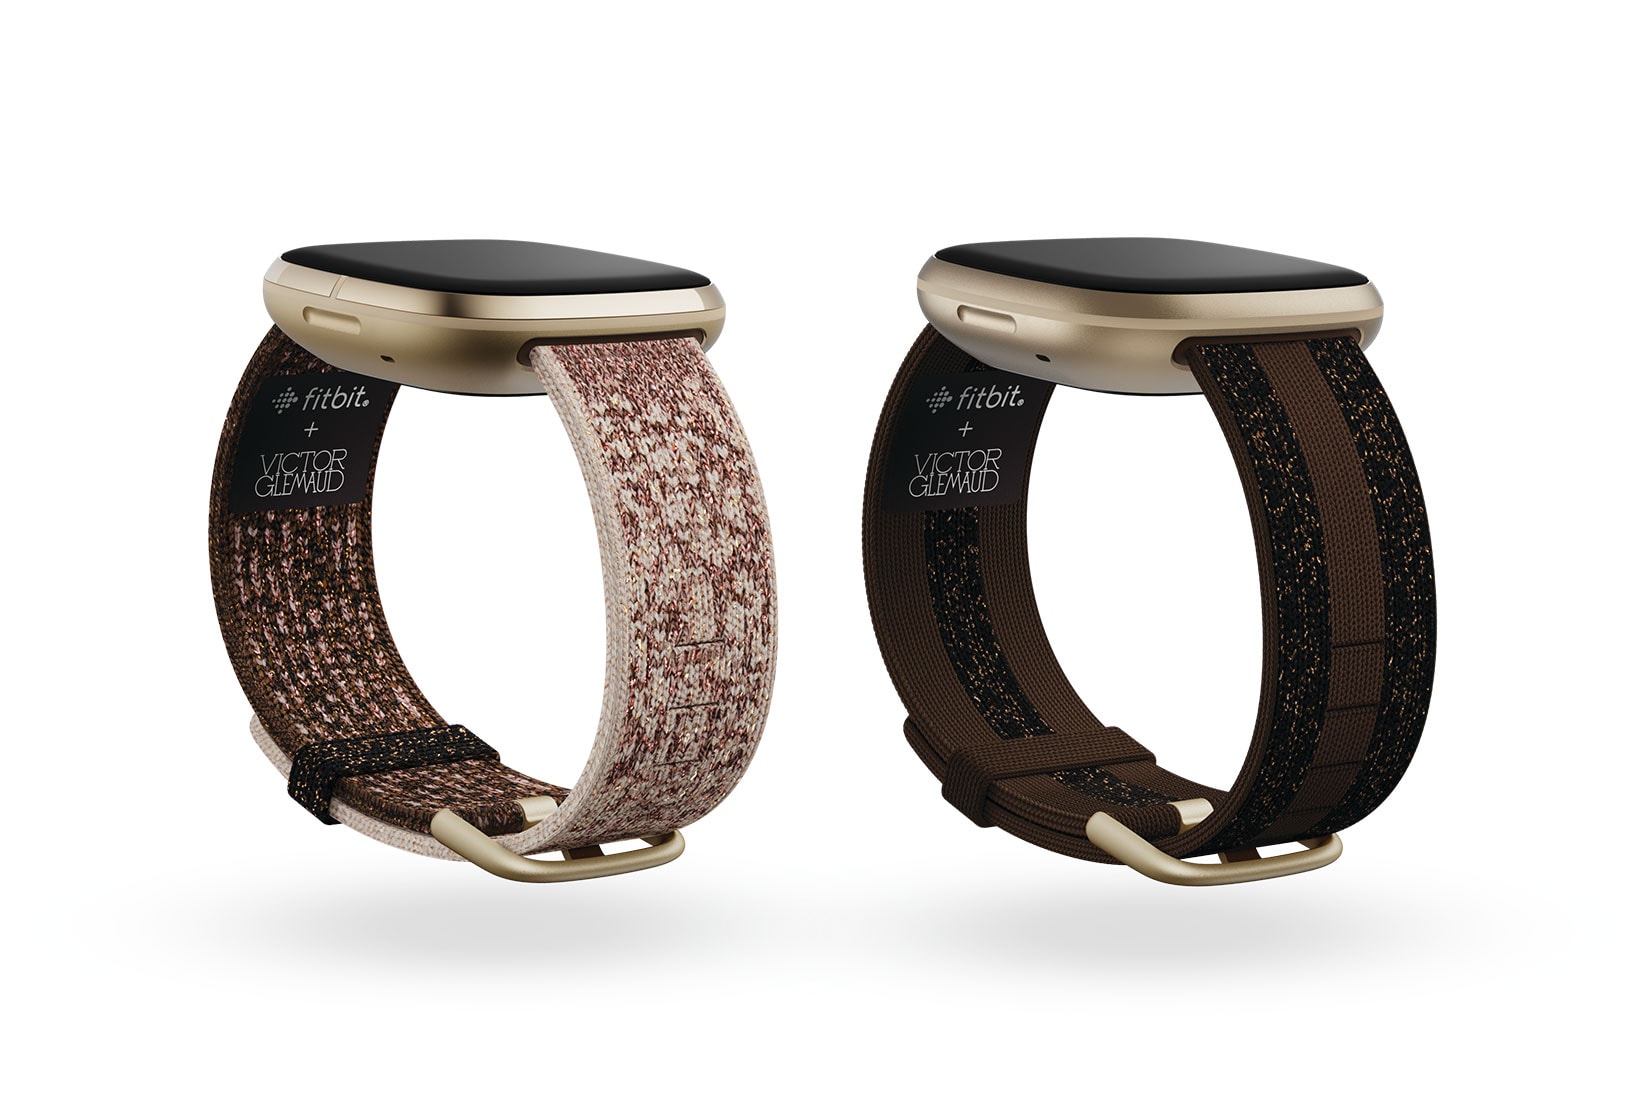 fitbit sense versa 3 fitness smartwatch Victor glemaud collaboration straps bands